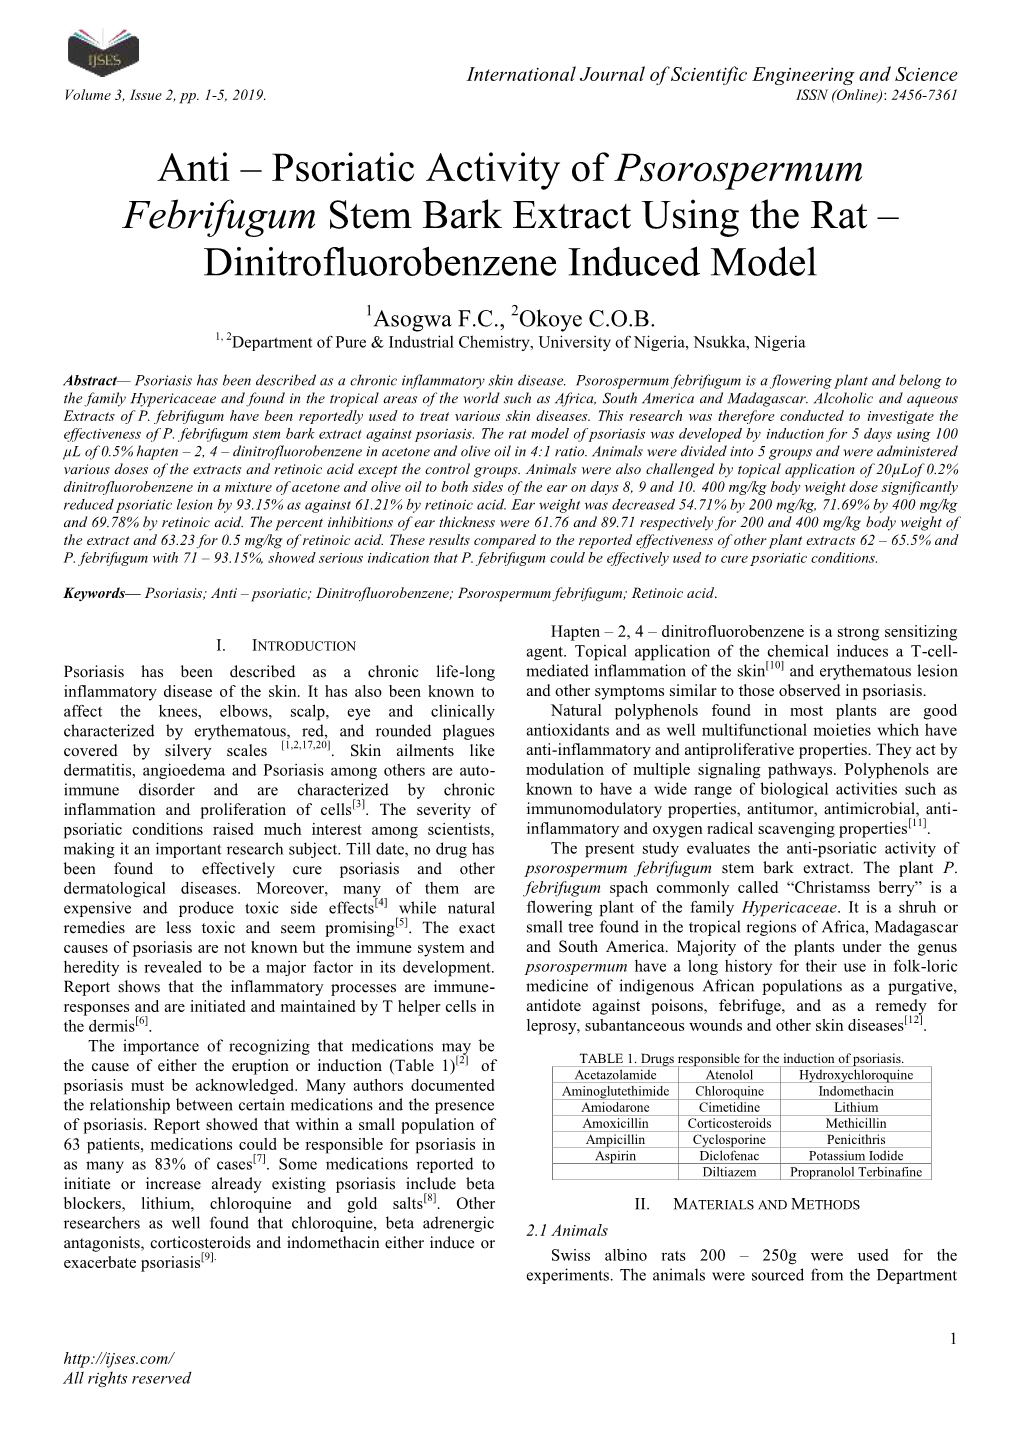 Anti – Psoriatic Activity of Psorospermum Febrifugum Stem Bark Extract Using the Rat – Dinitrofluorobenzene Induced Model